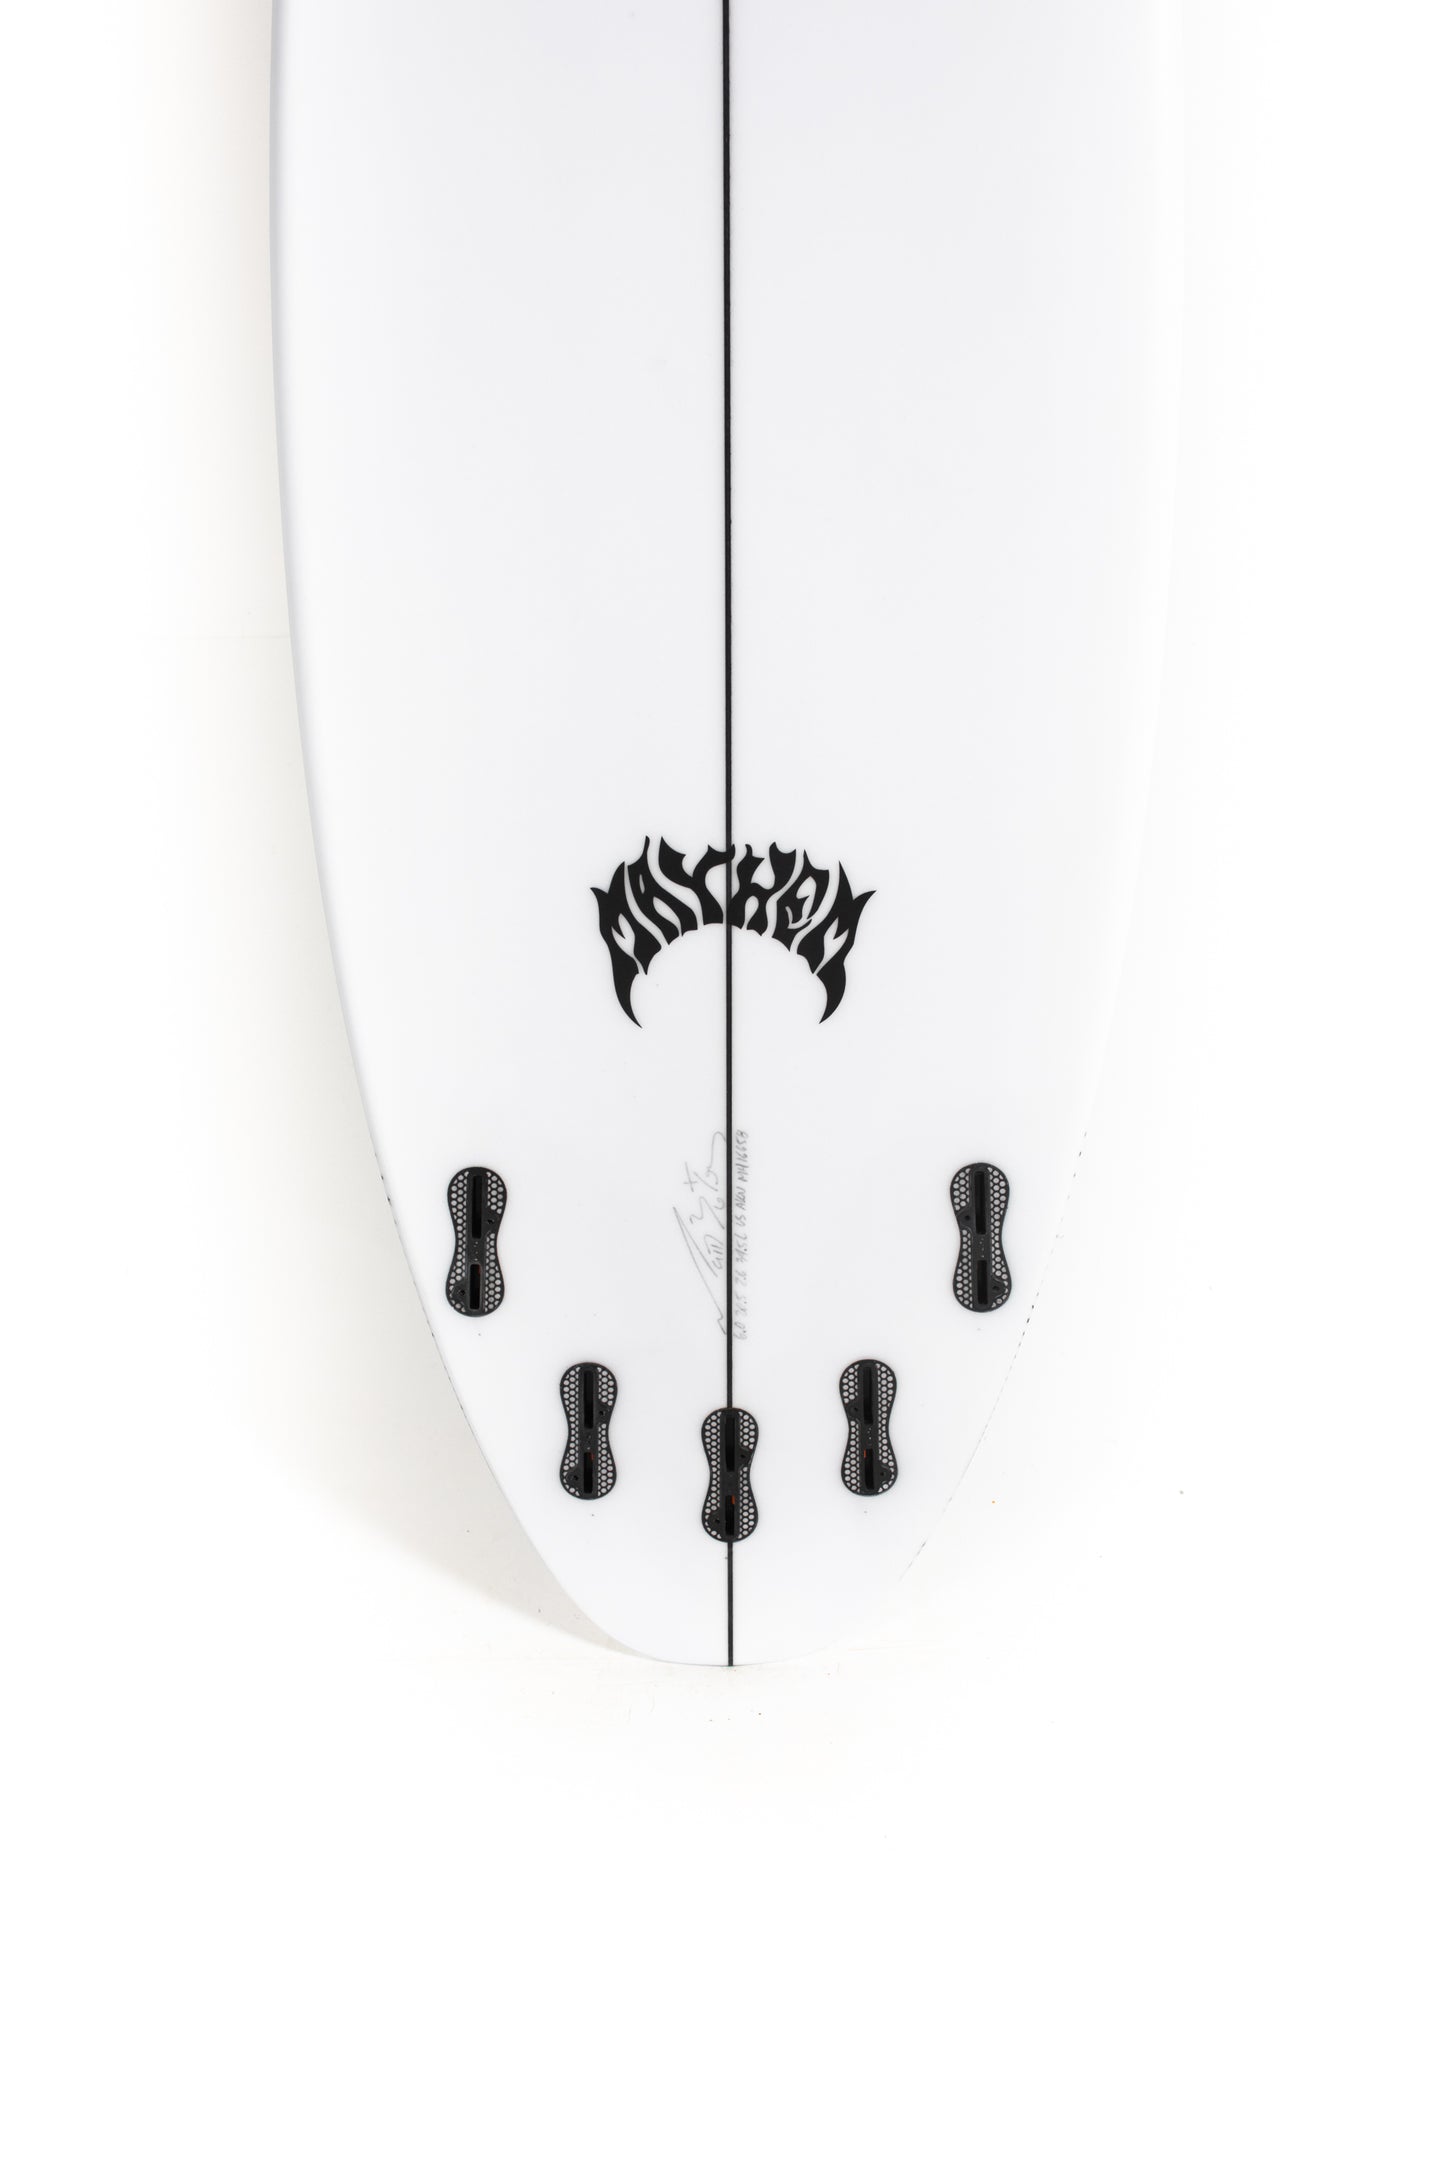 
                  
                    Pukas Surf Shop - Lost Surfboard - PUDDLE JUMPER-PRO by Matt Biolos - 6'0" x 20,5 x 2.6 x 34,55L - MH16658
                  
                